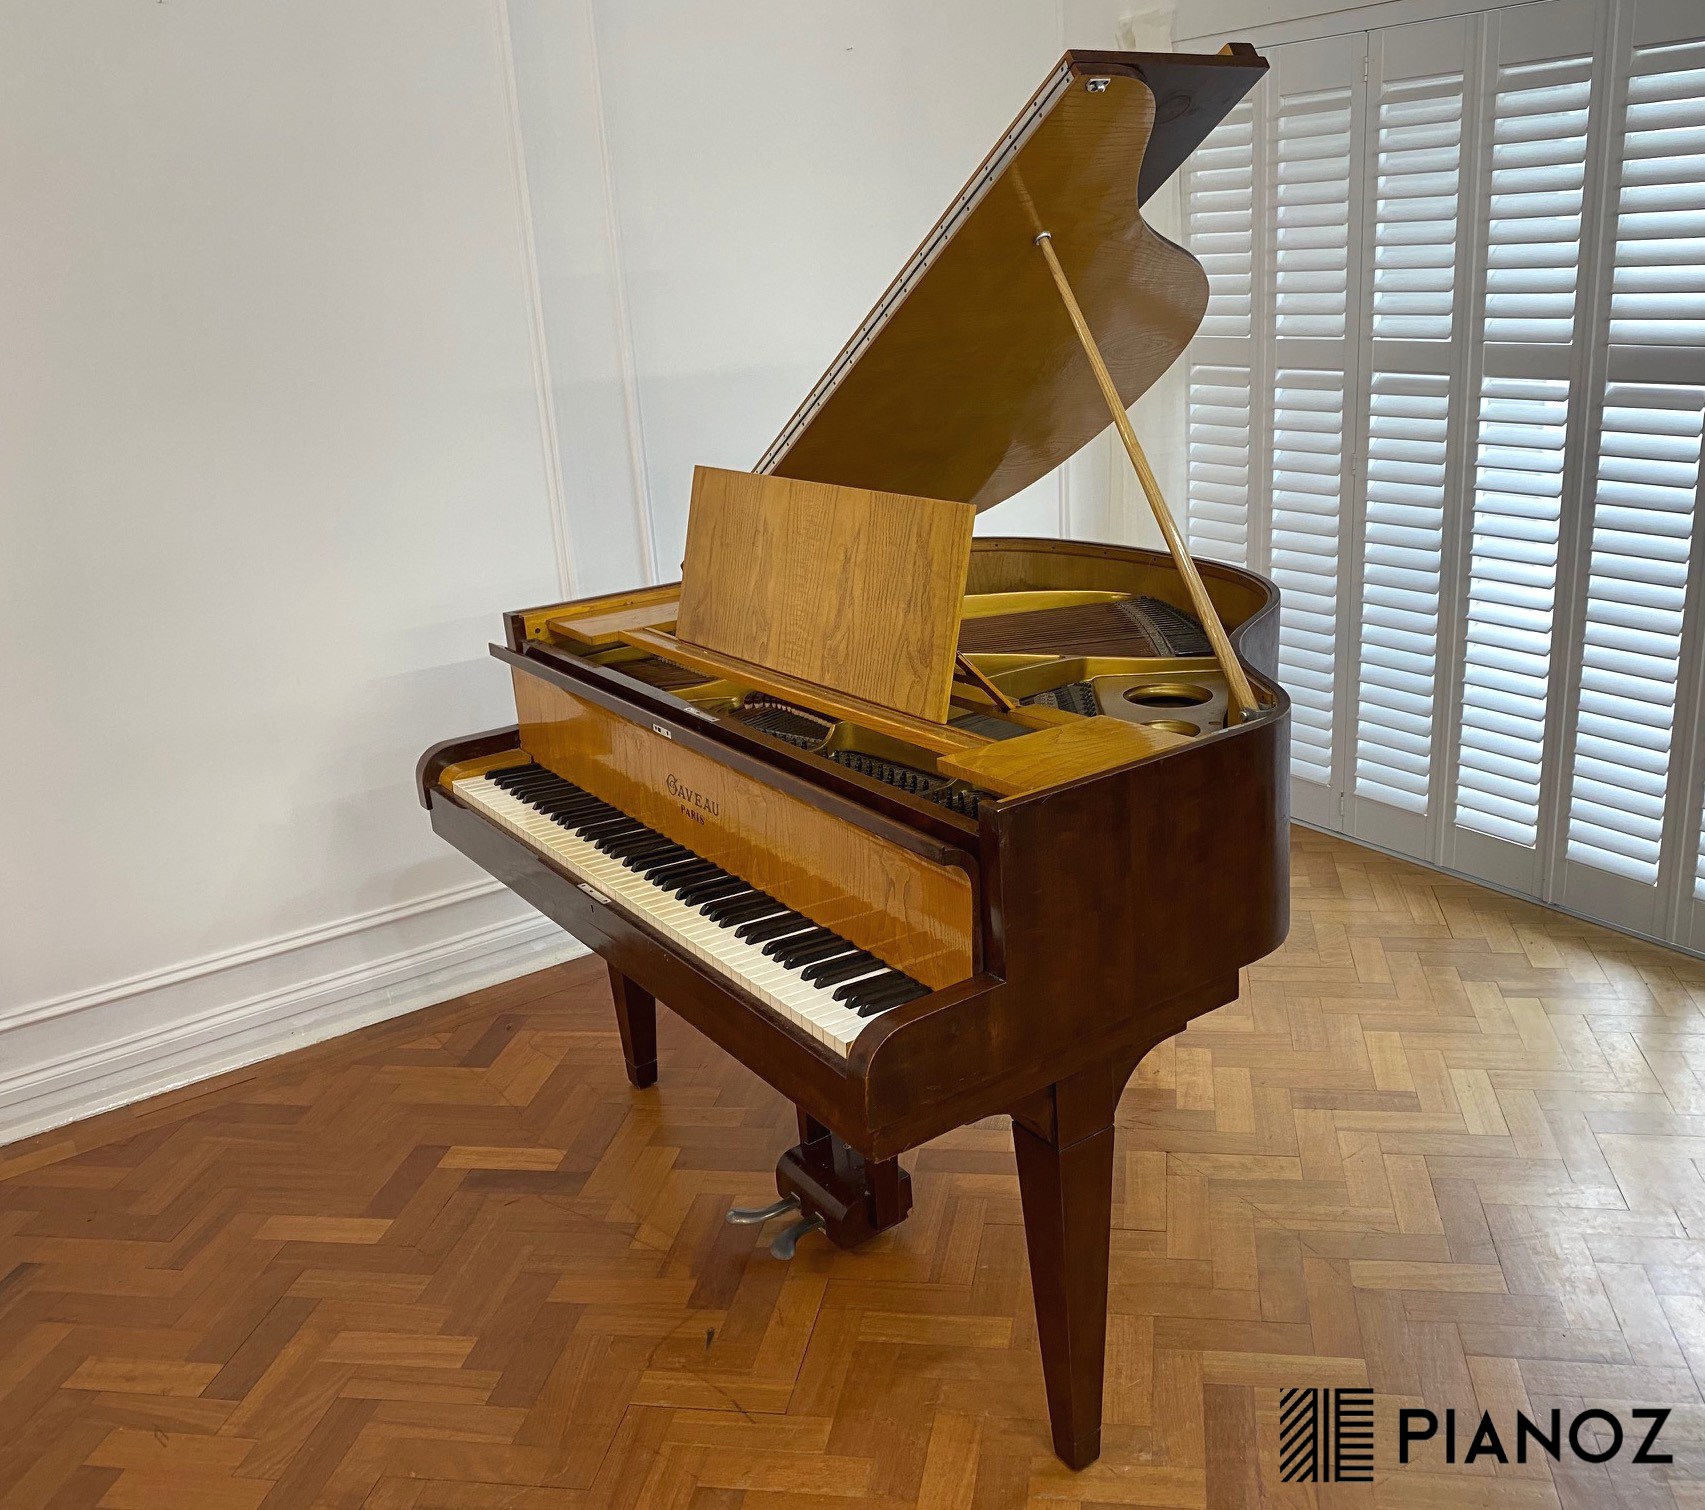 Gaveau Art Deco Baby Grand Piano piano for sale in UK